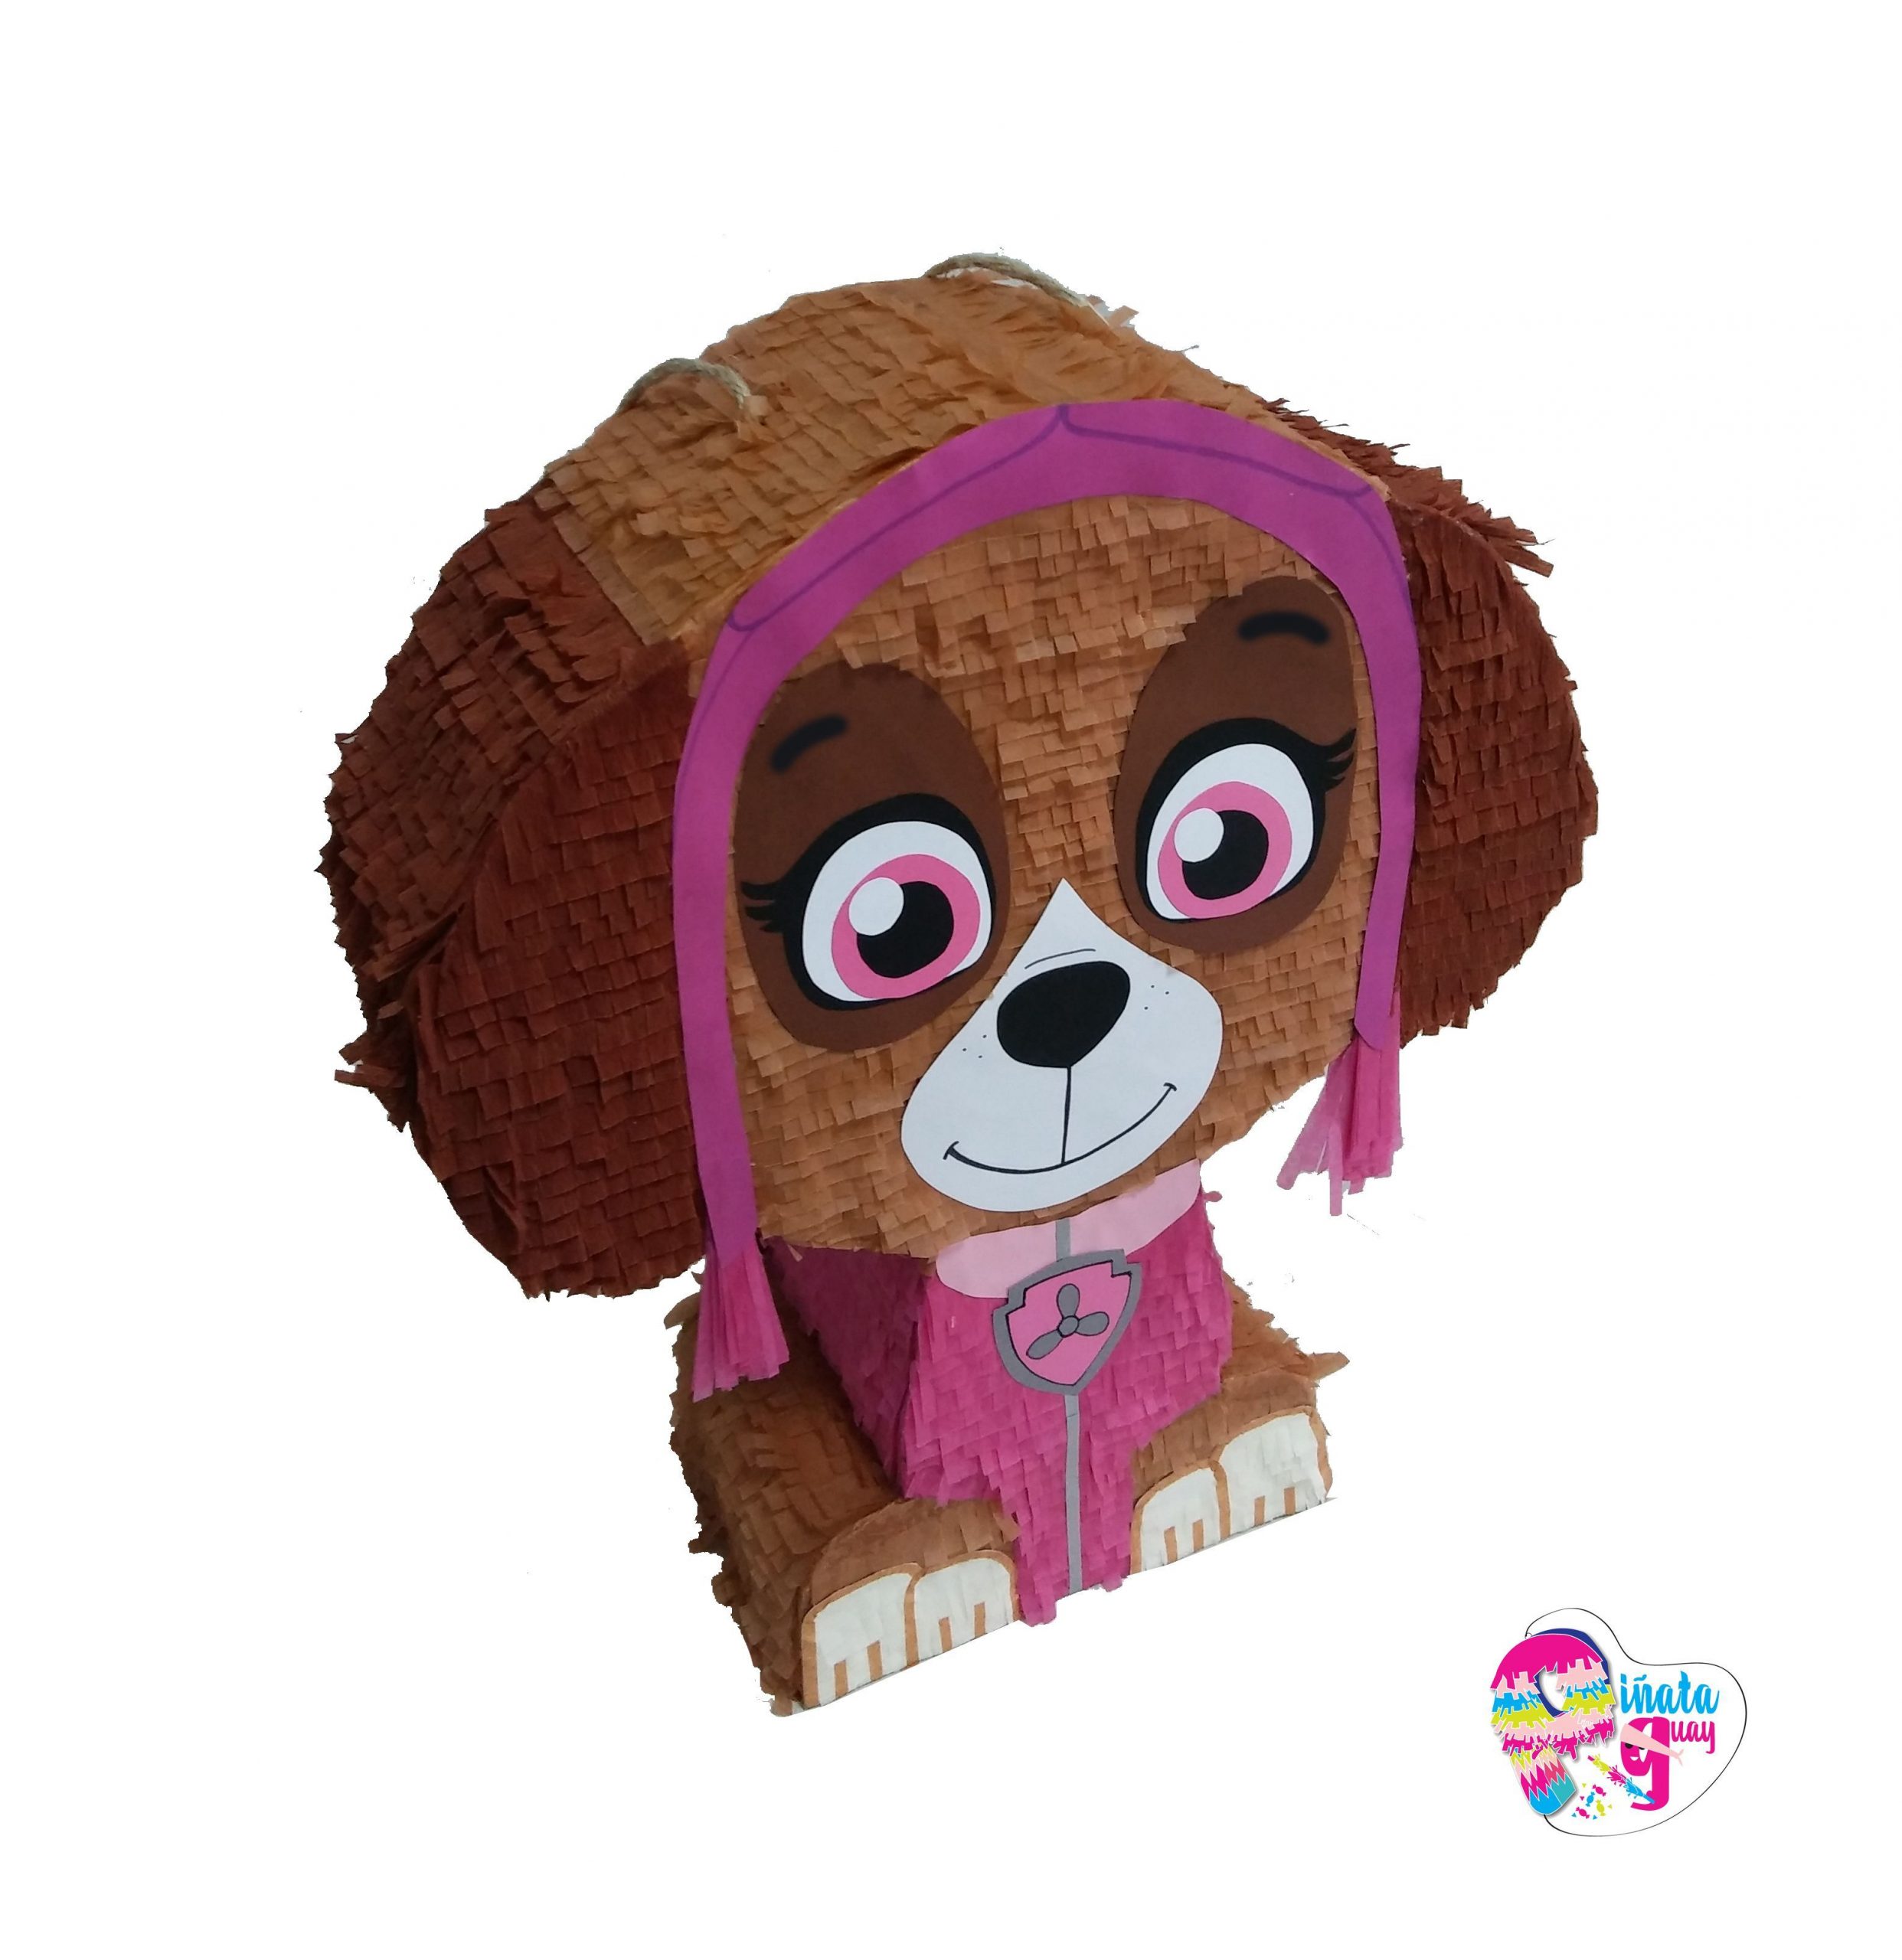 Piñata Skye - Patrulla canina - Piñata Guay